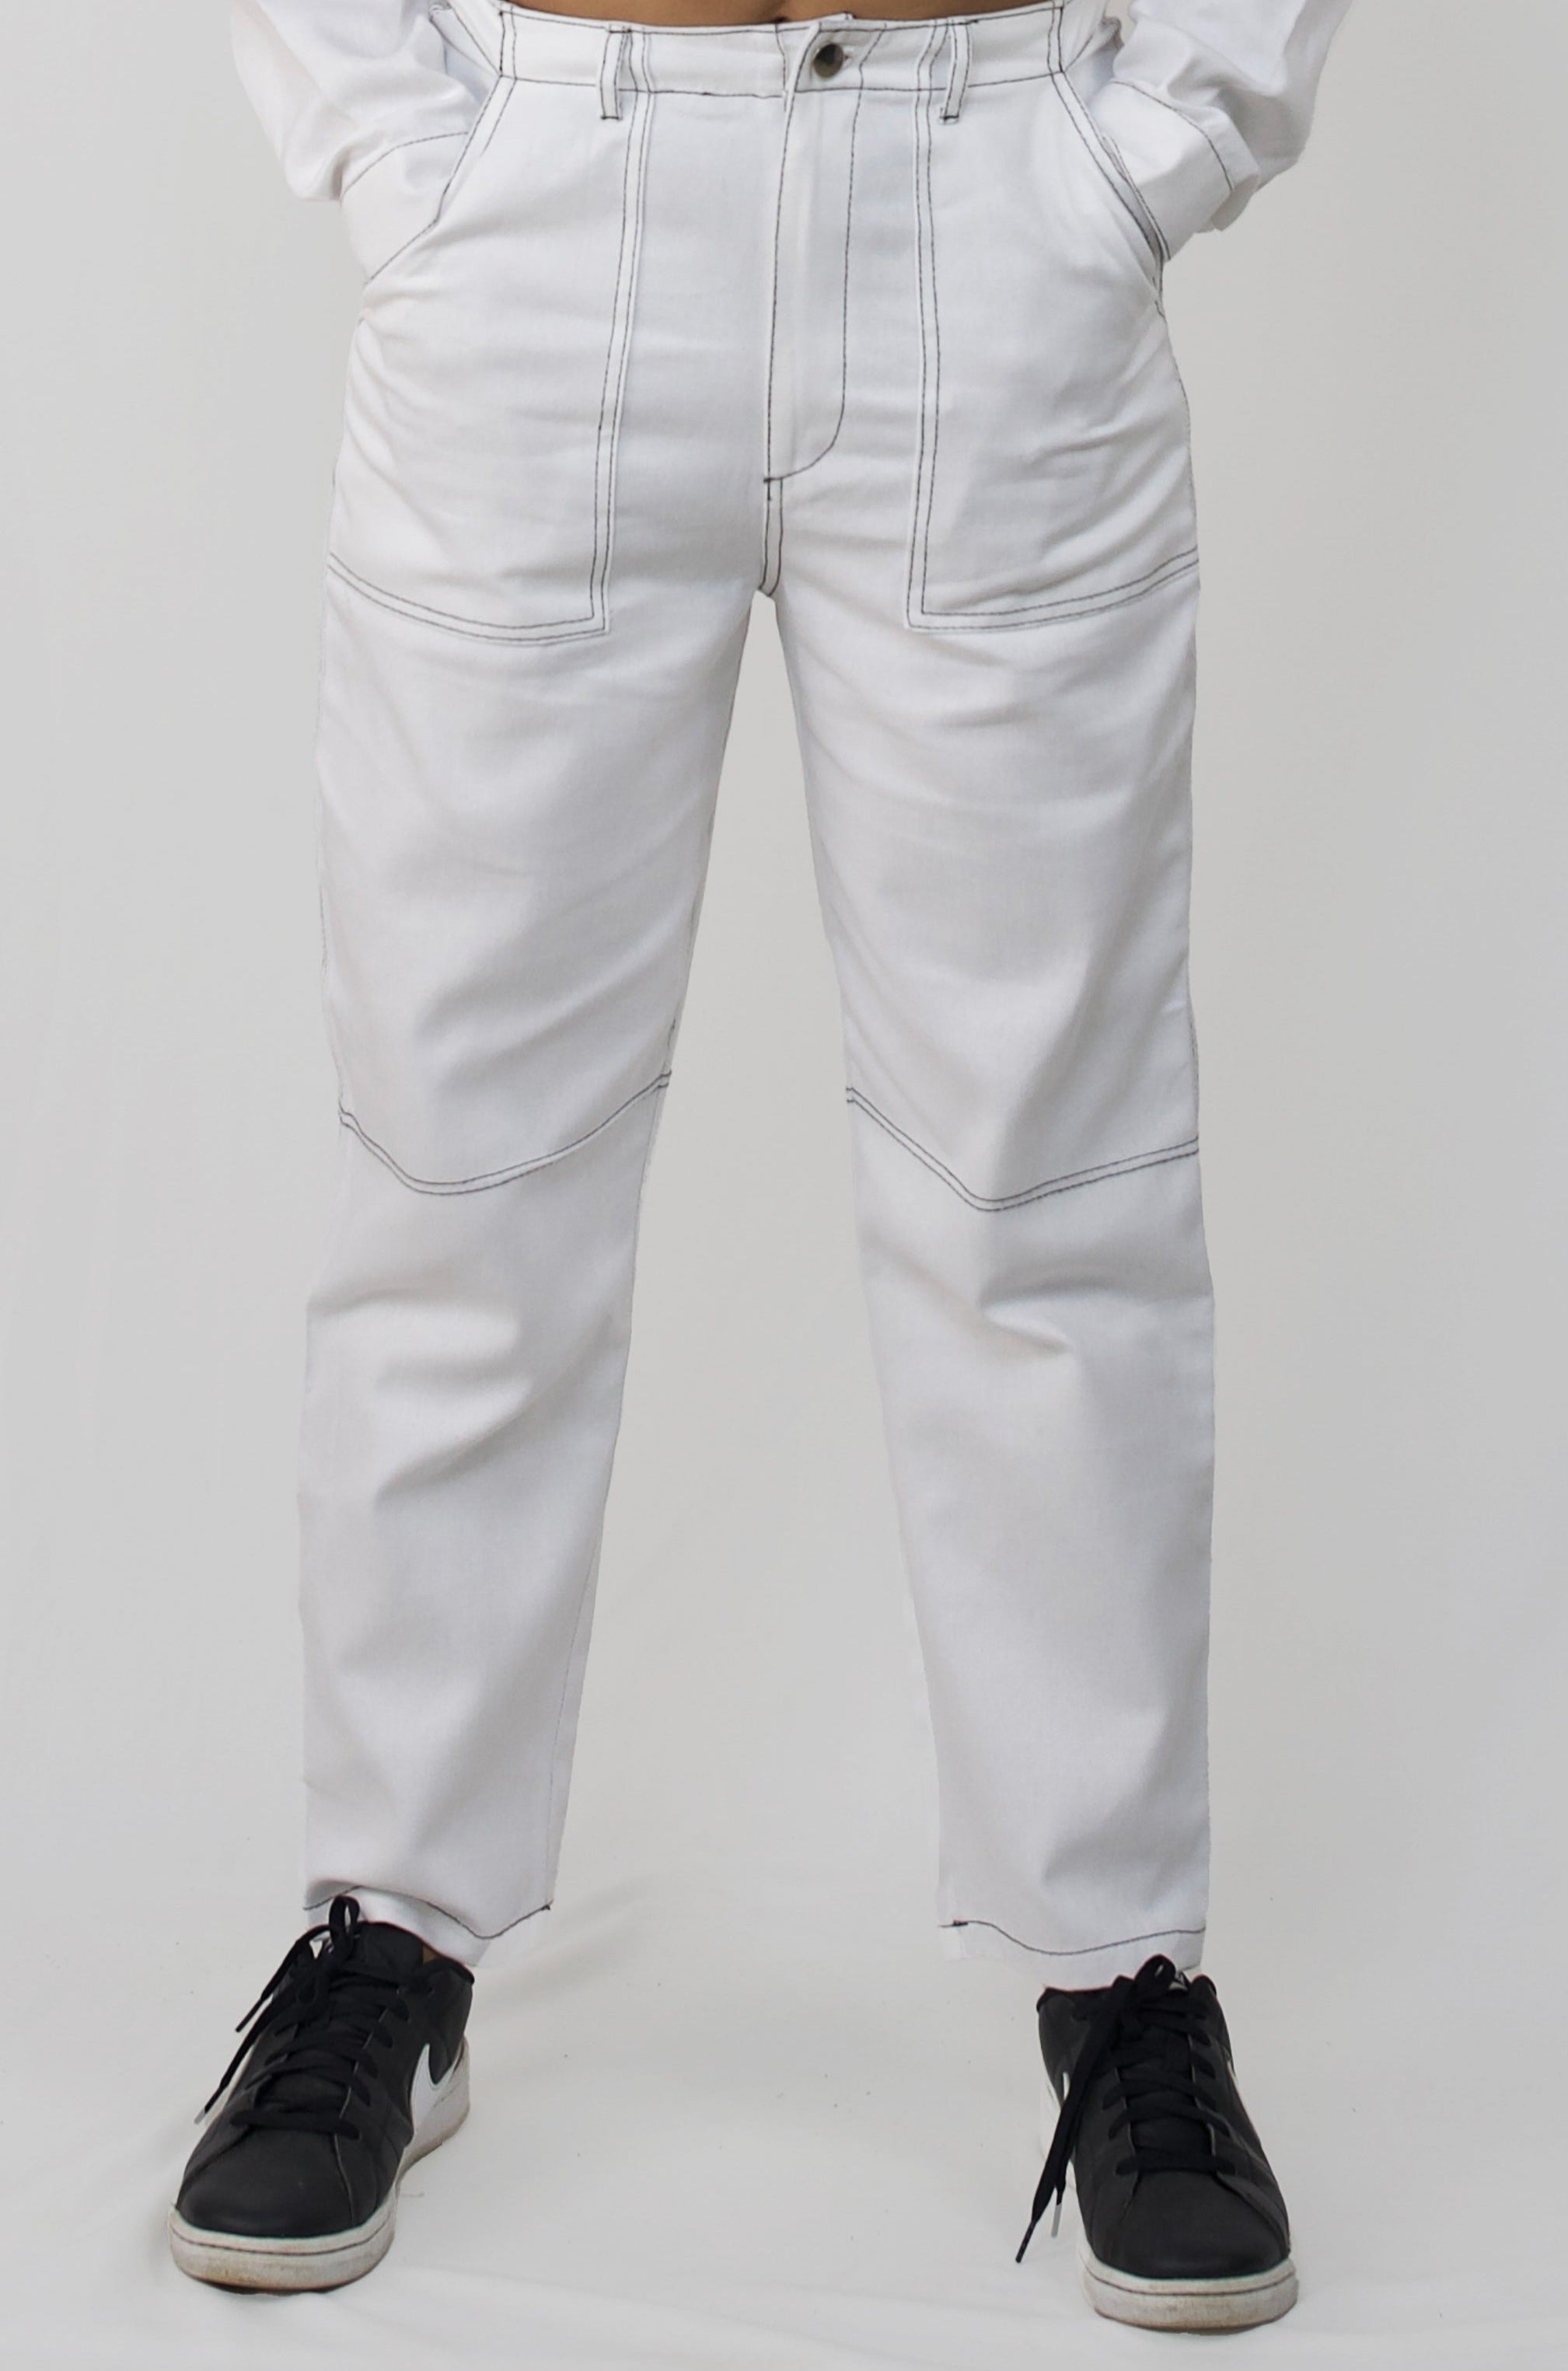 Denim Trousers - Jeans & Denim Pants for Men | SUITSUPPLY US